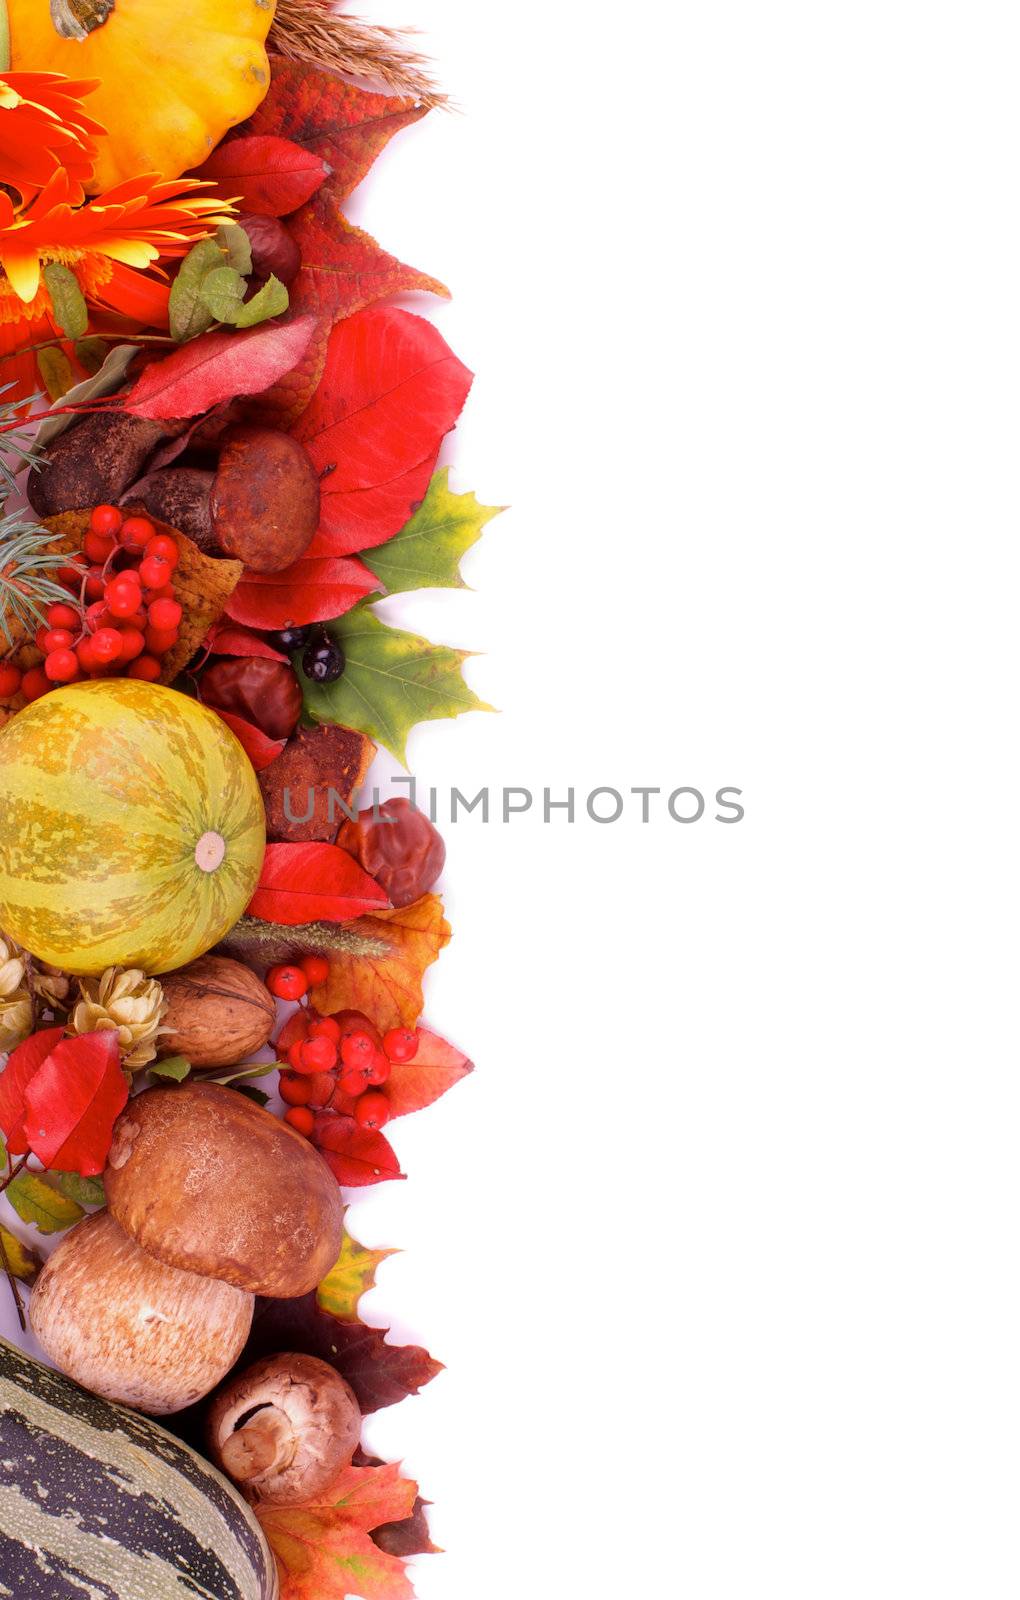 Autumn Frame by zhekos